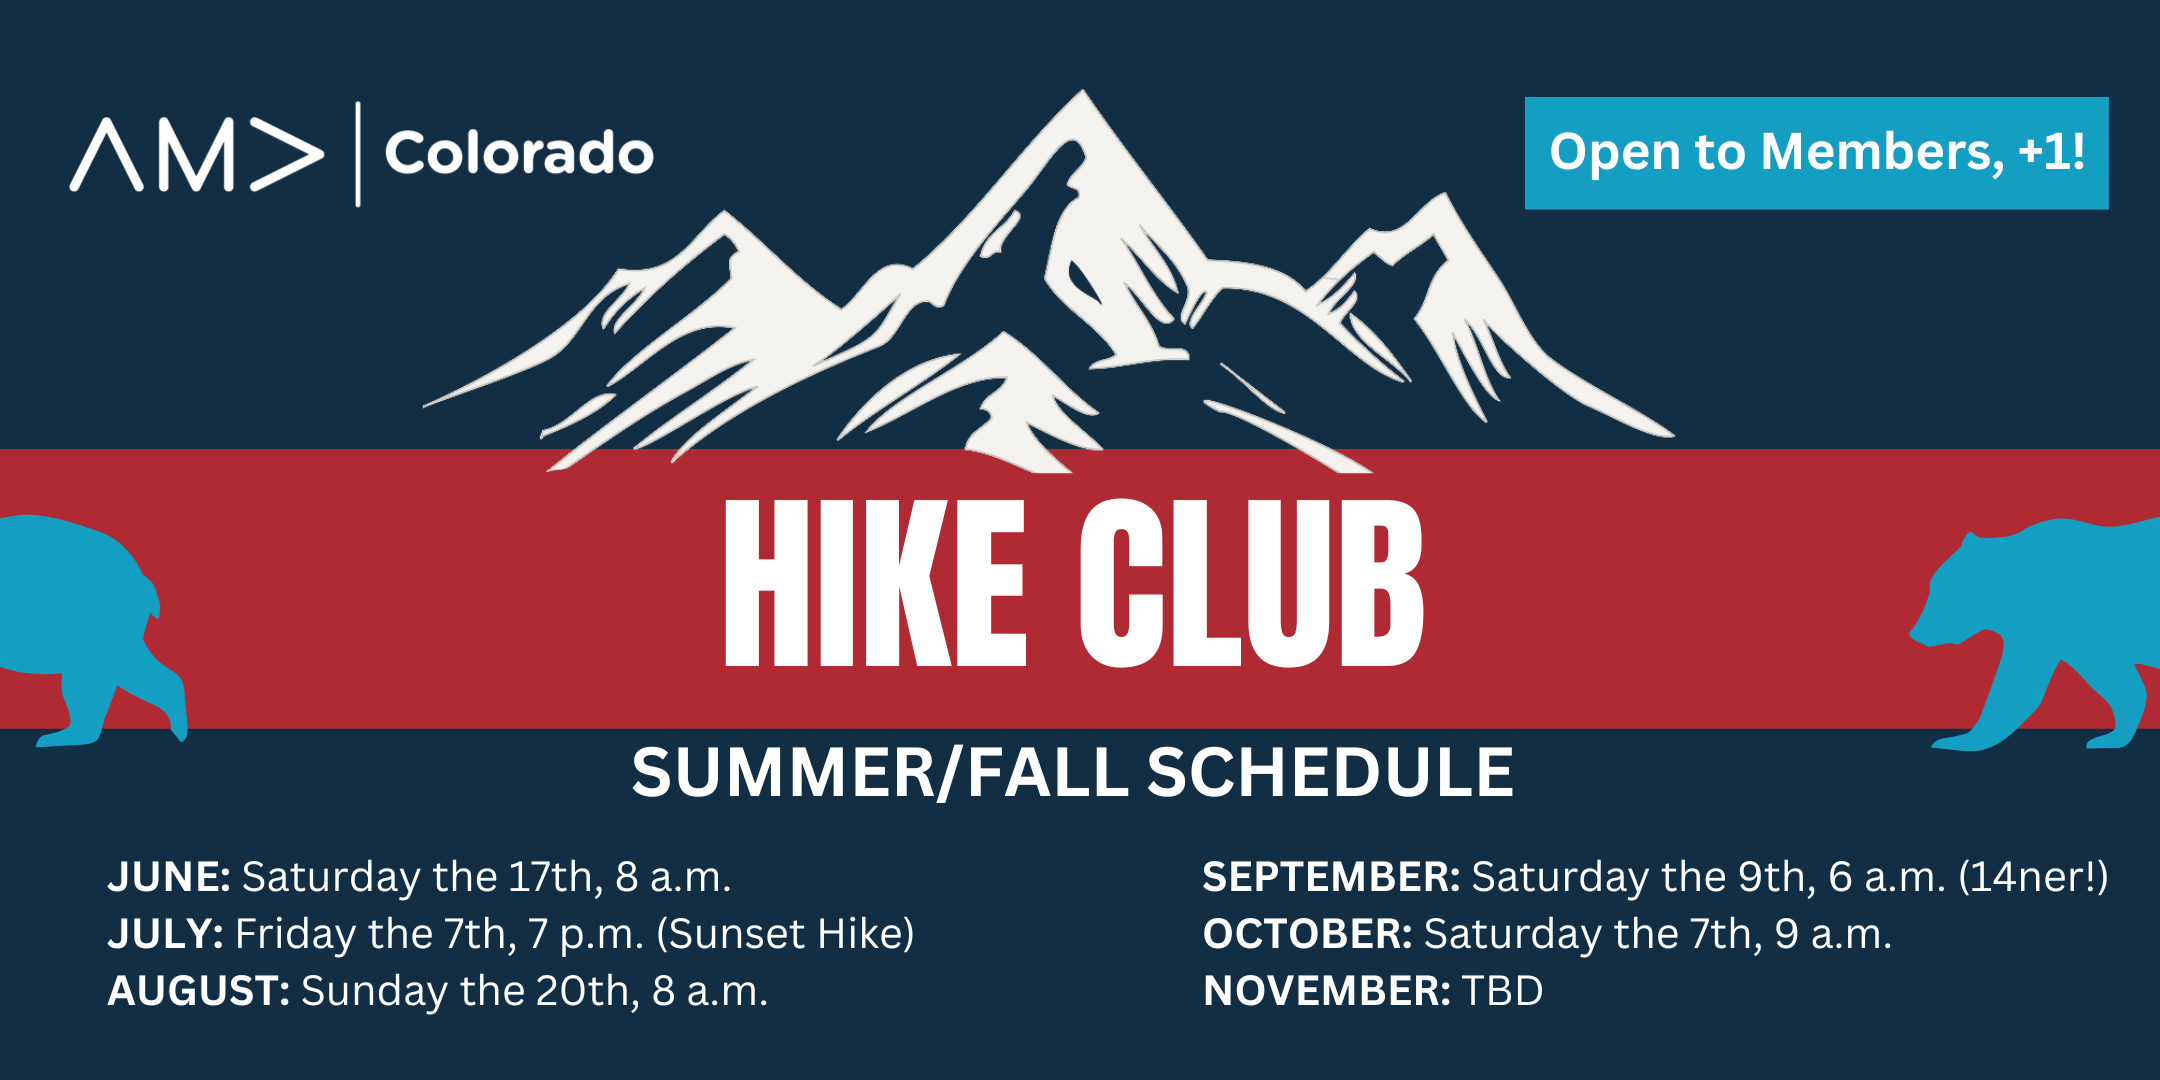 AMA Colorado Hike Club graphic image